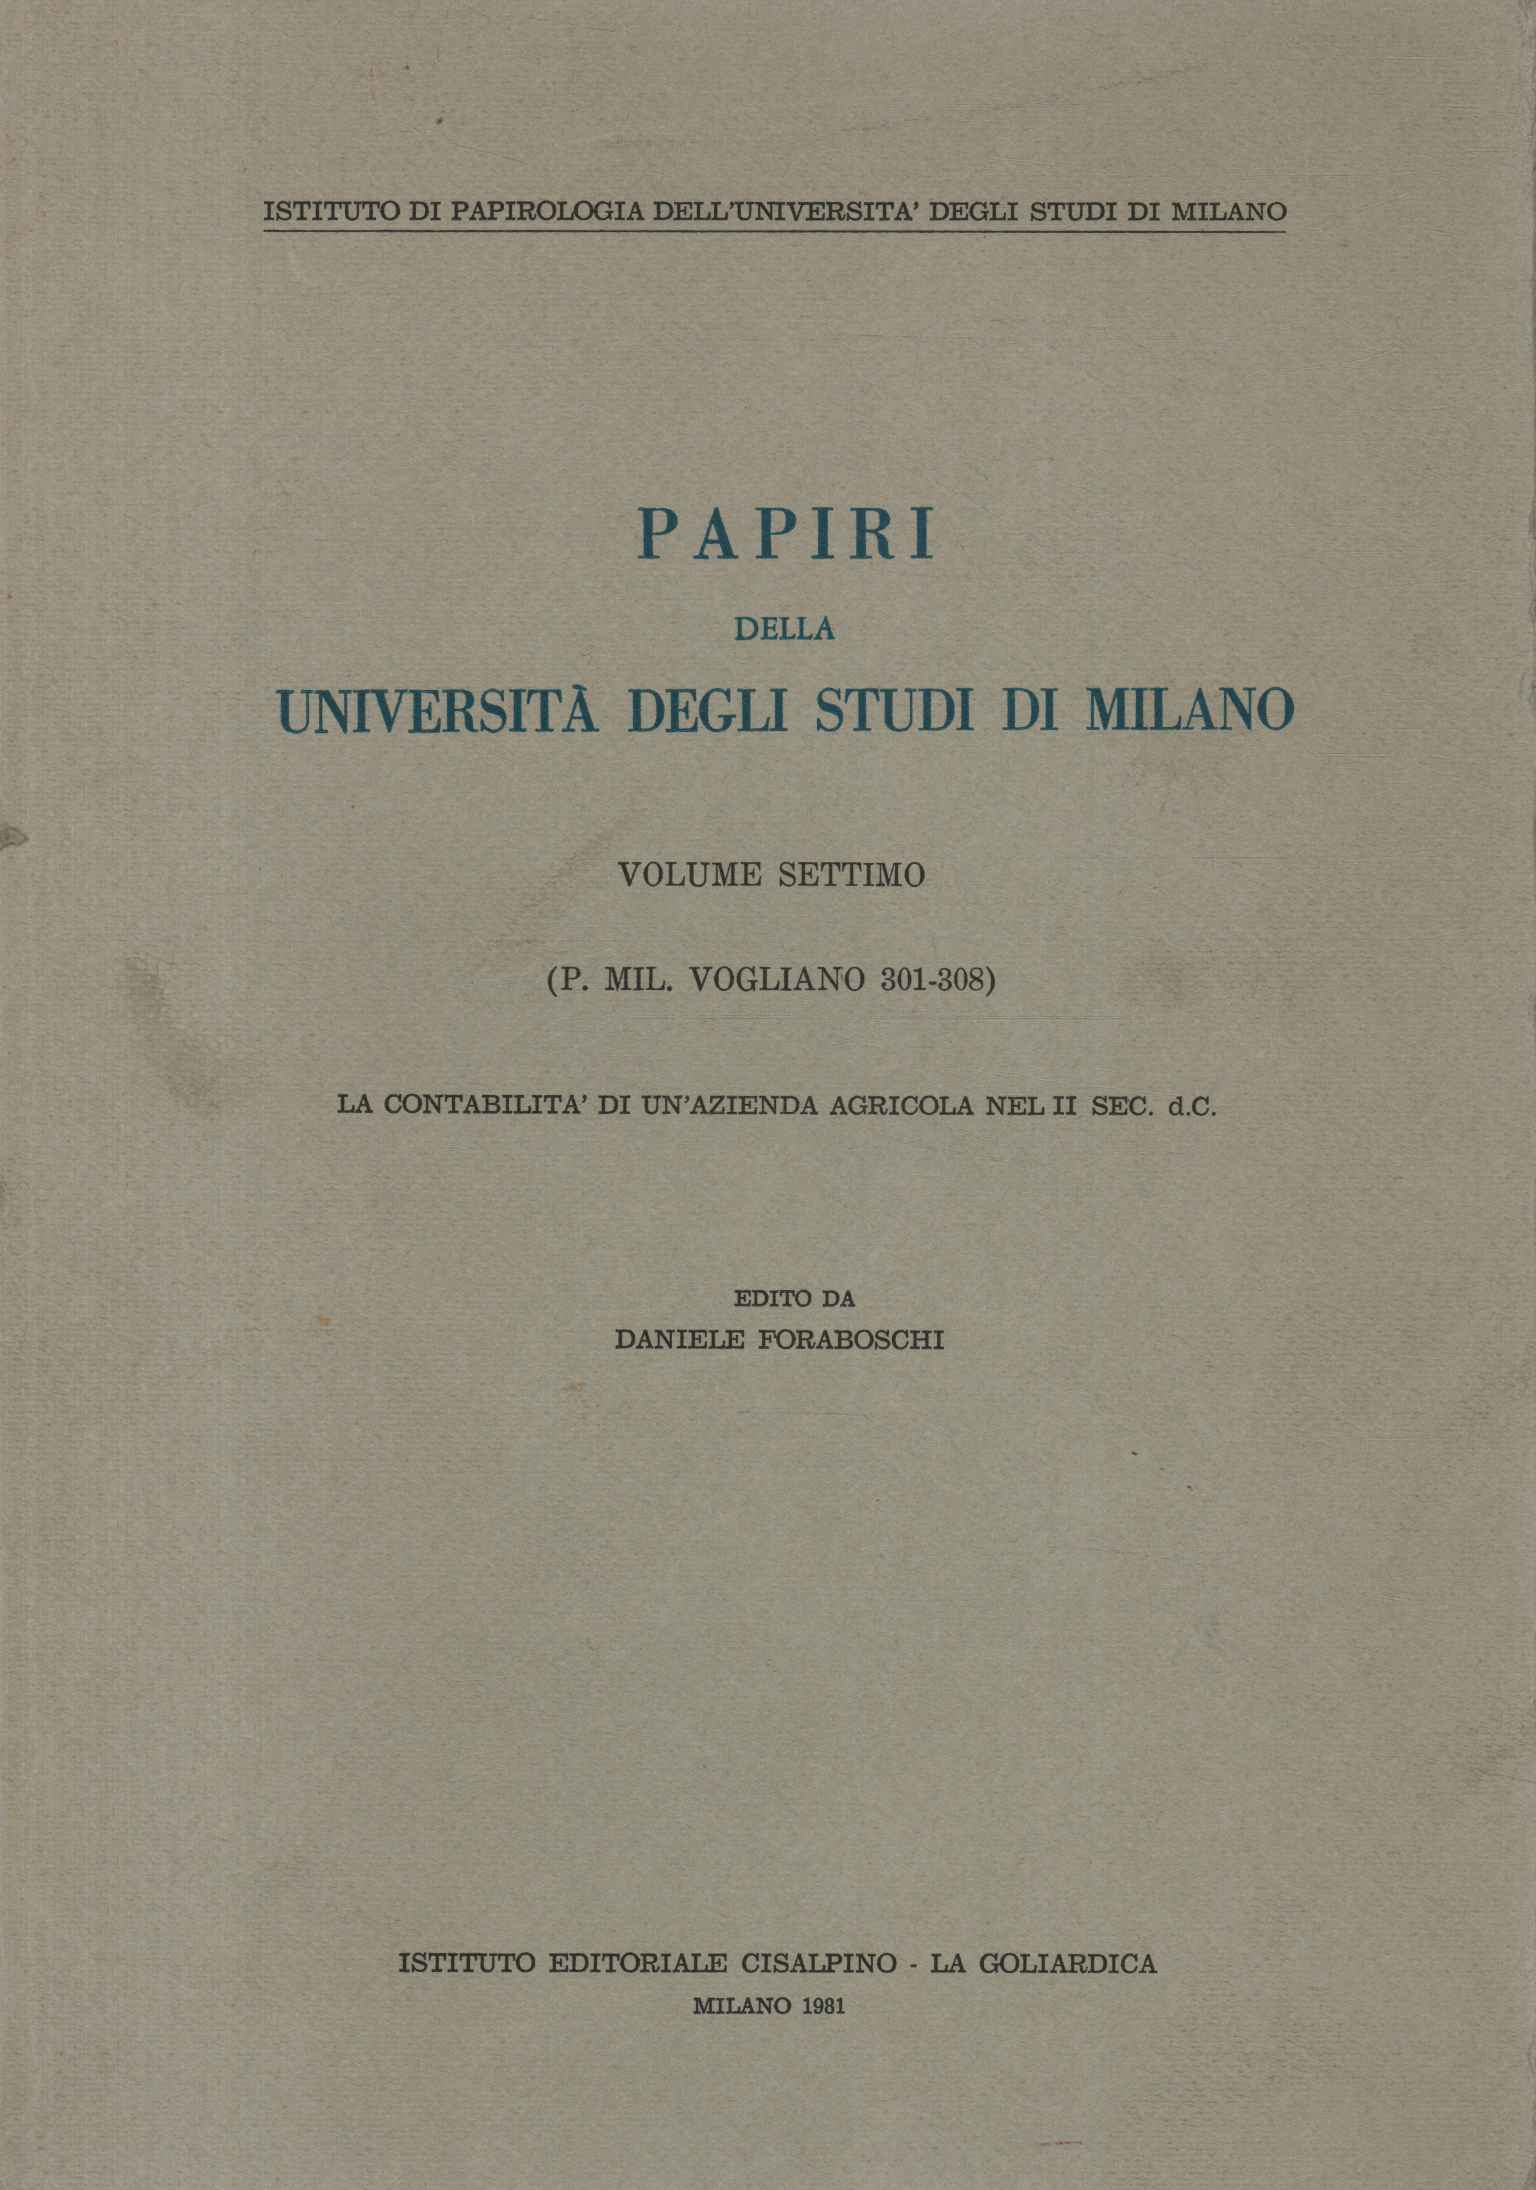 Papyri of the University of Studies%2,Papyri of the University of Studies%2